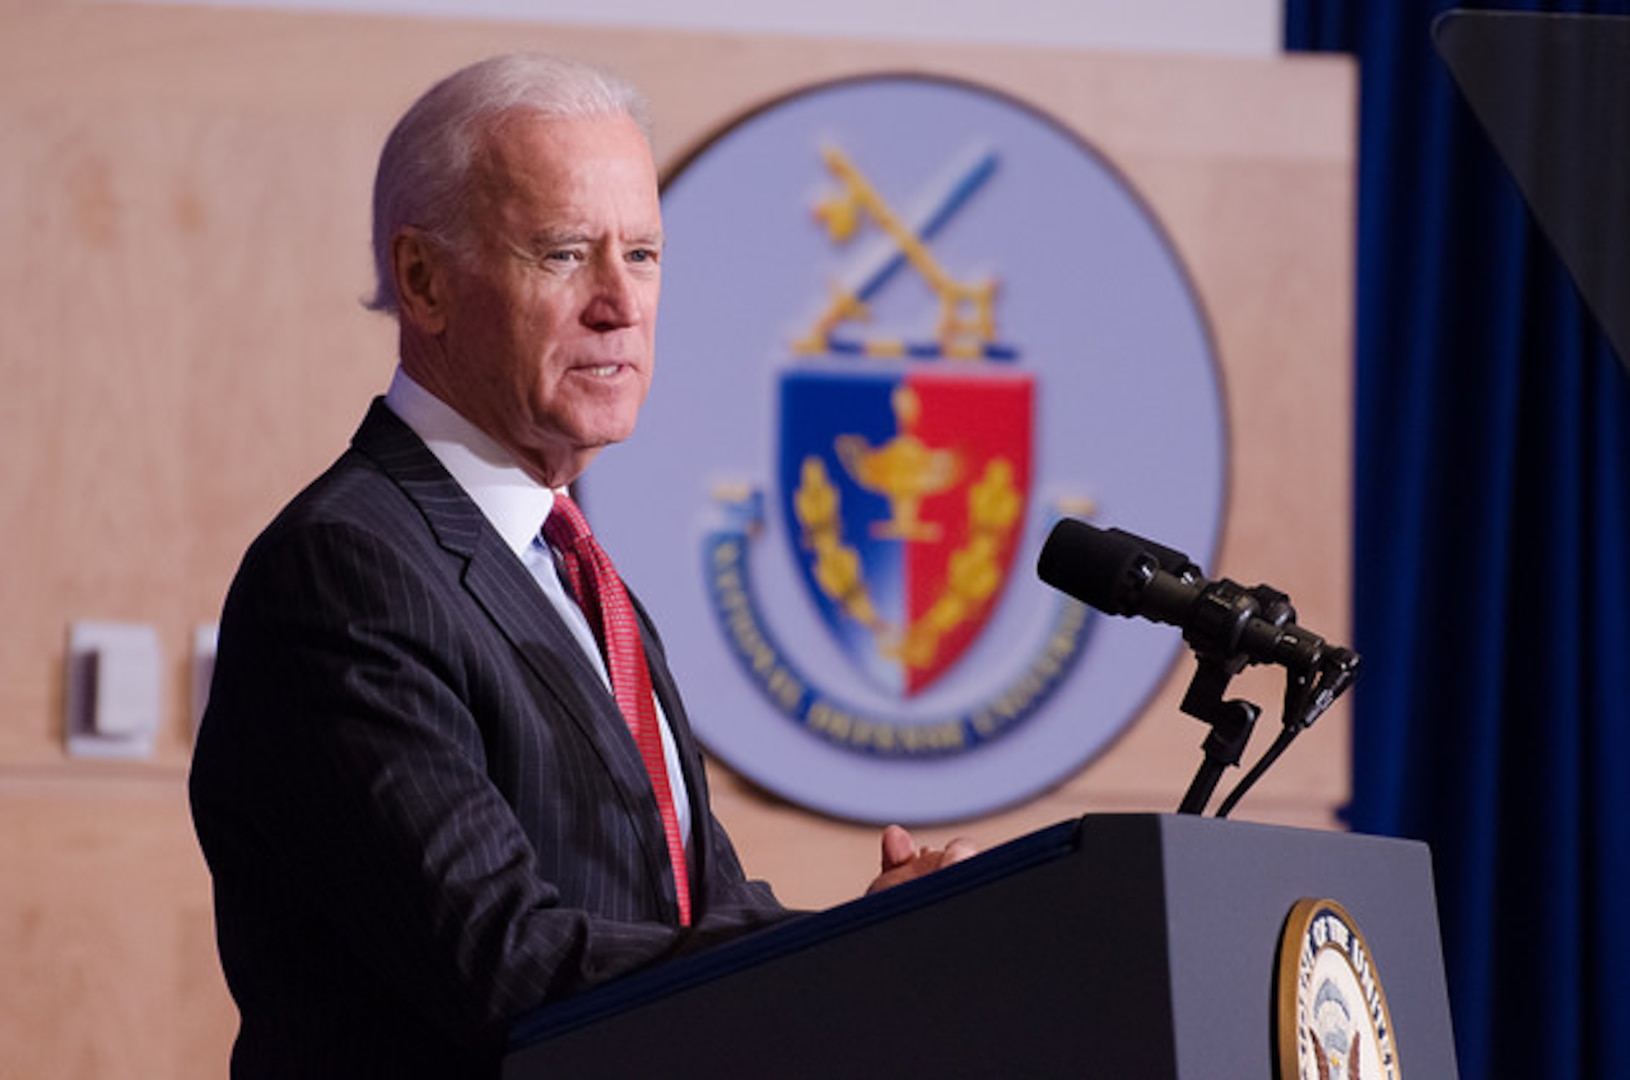 Vice President Joe Biden speaks in Lincoln Hall at NDU on 9 April 2015.